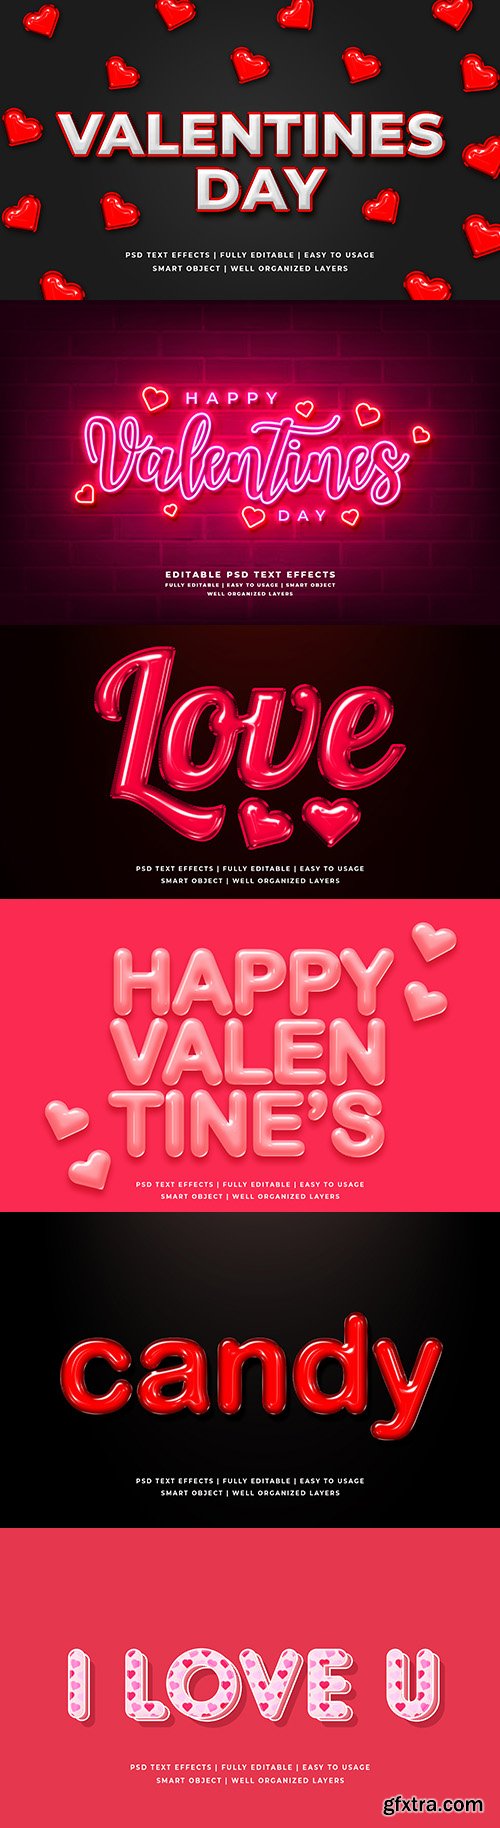 St. Valentine\'s Day romantic style Photoshop design